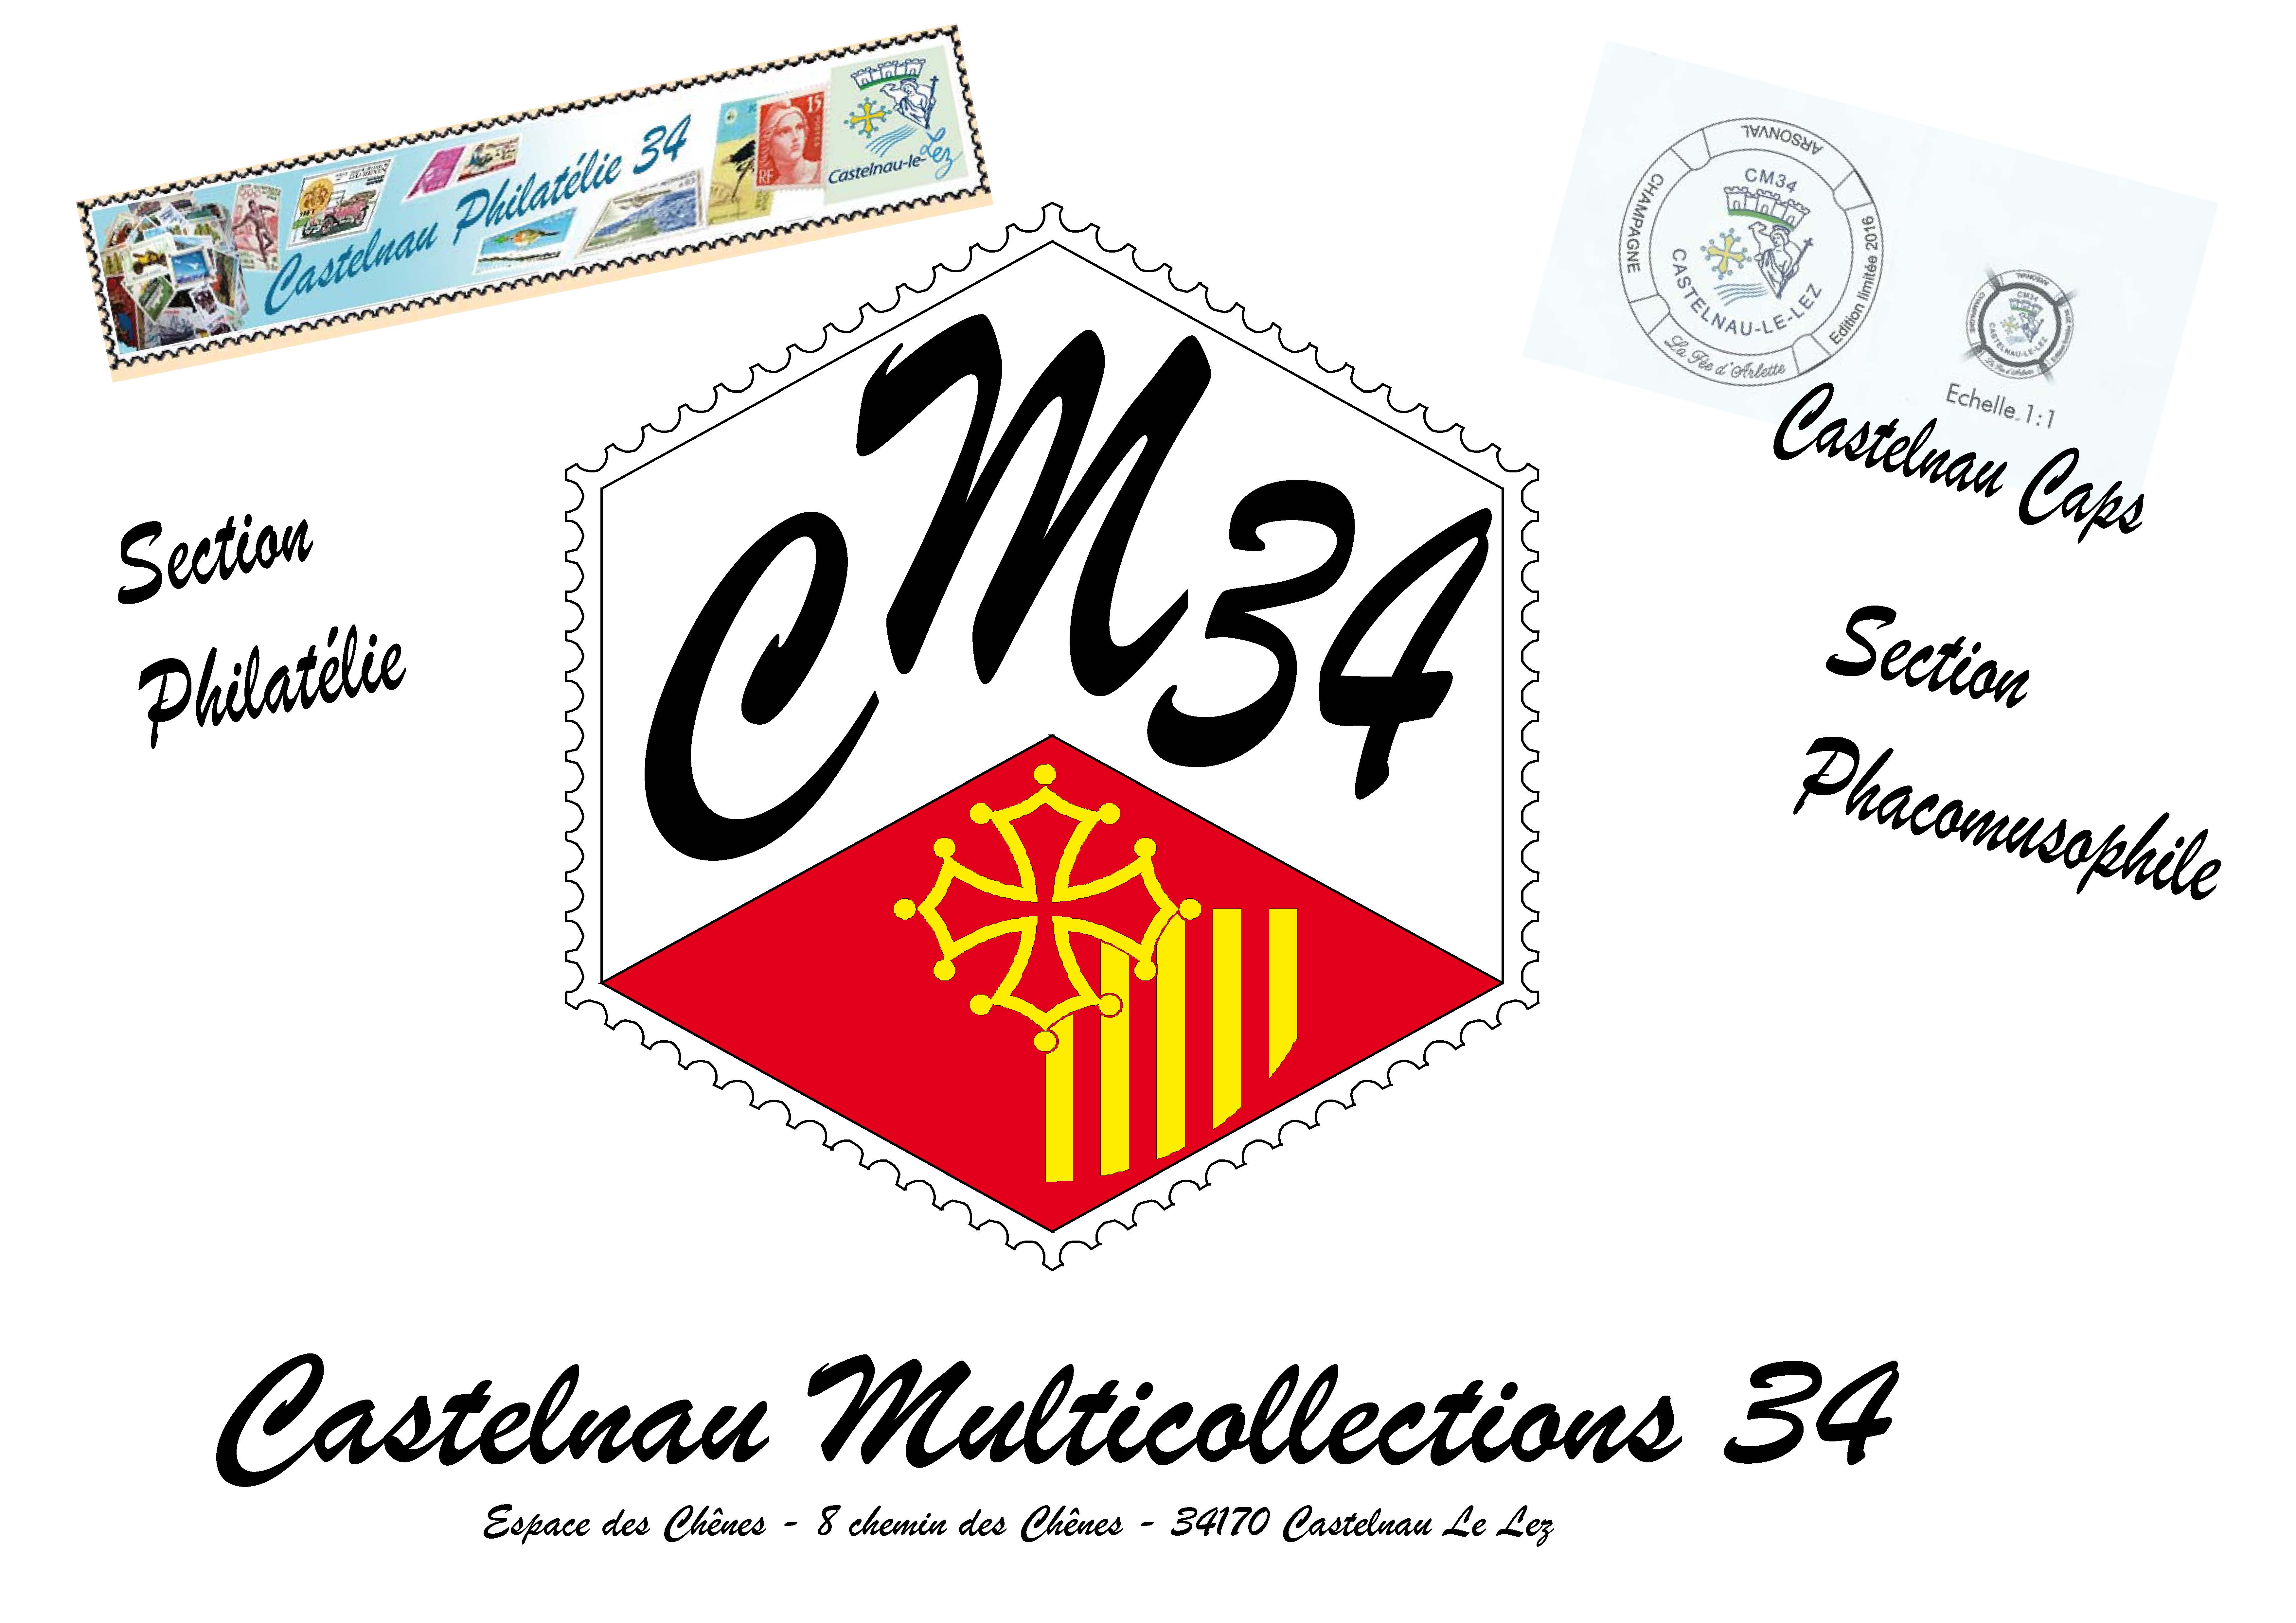 Castelnau Multicollections 34